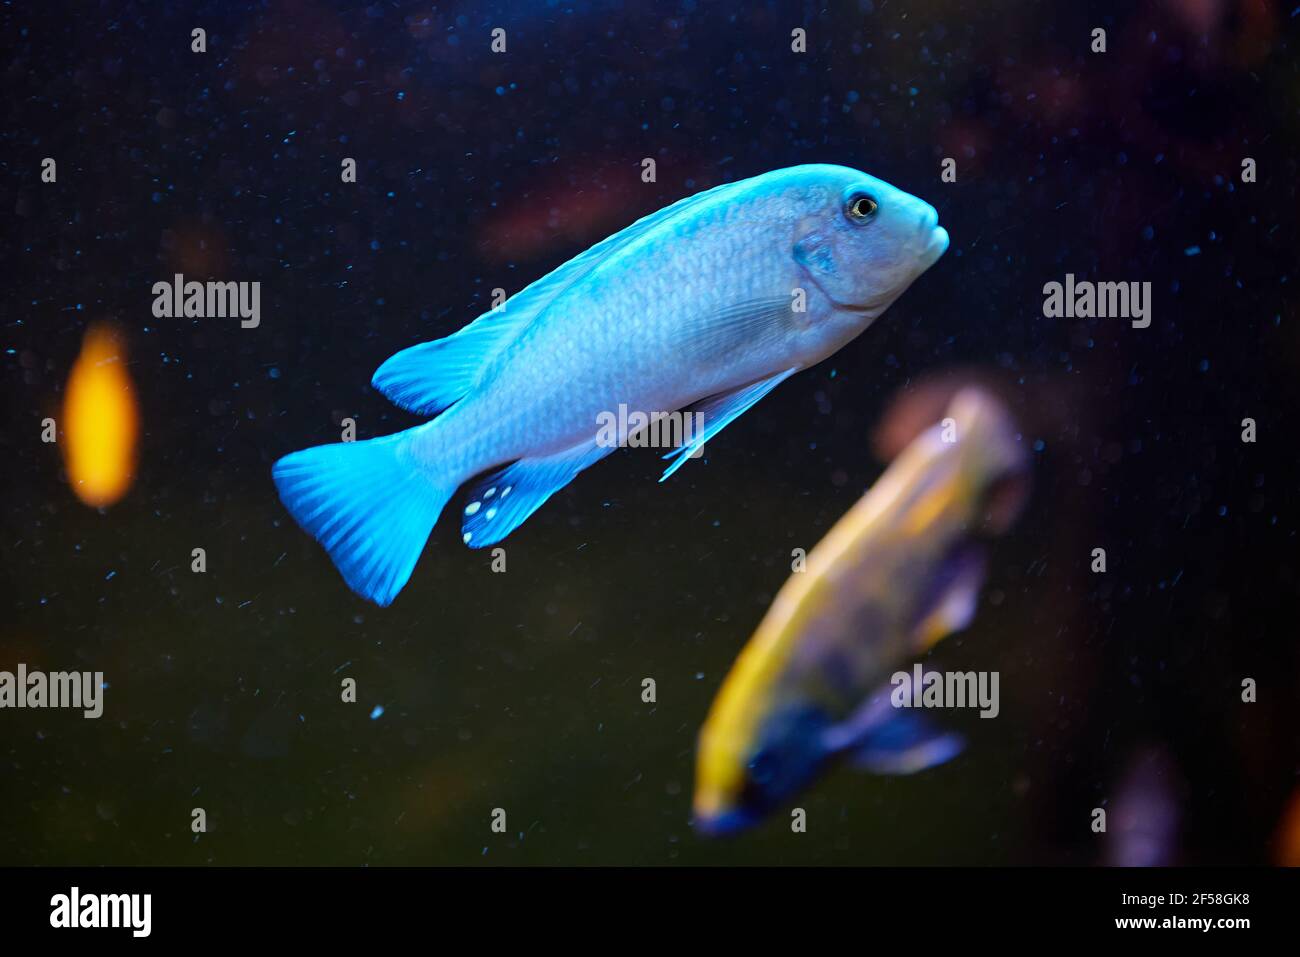 Fish tank with Blue Malawi Cichlids Sciaenochromis-genus haplochromine cichlids endemic to Lake Malawi in East Africa. Stock Photo